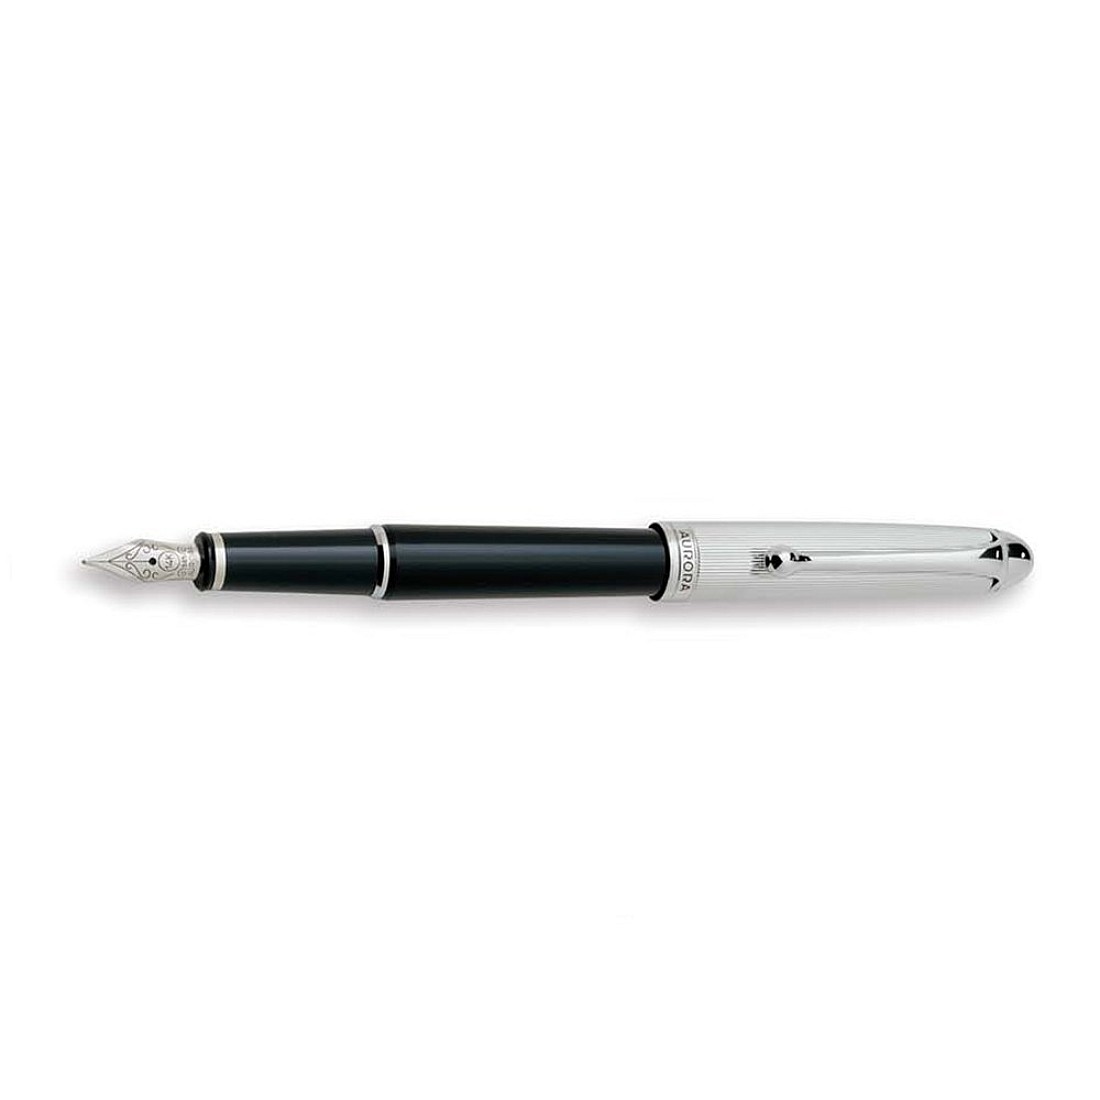 Aurora 88 Black and Chrome Fountain pen